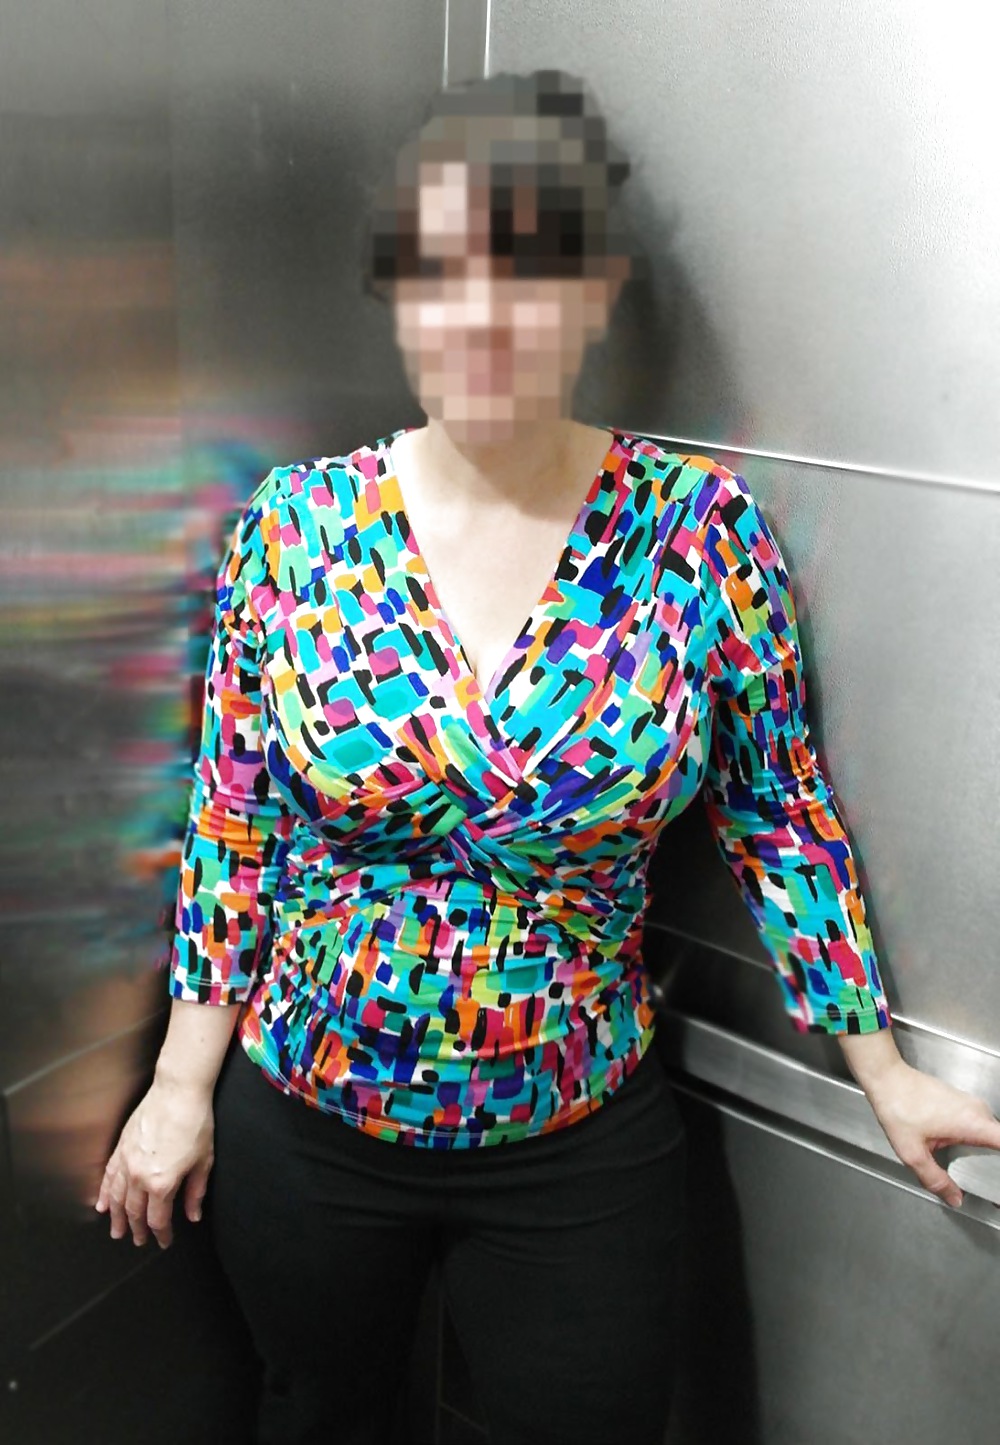 Free mom flashing her blue bra in elevator photos